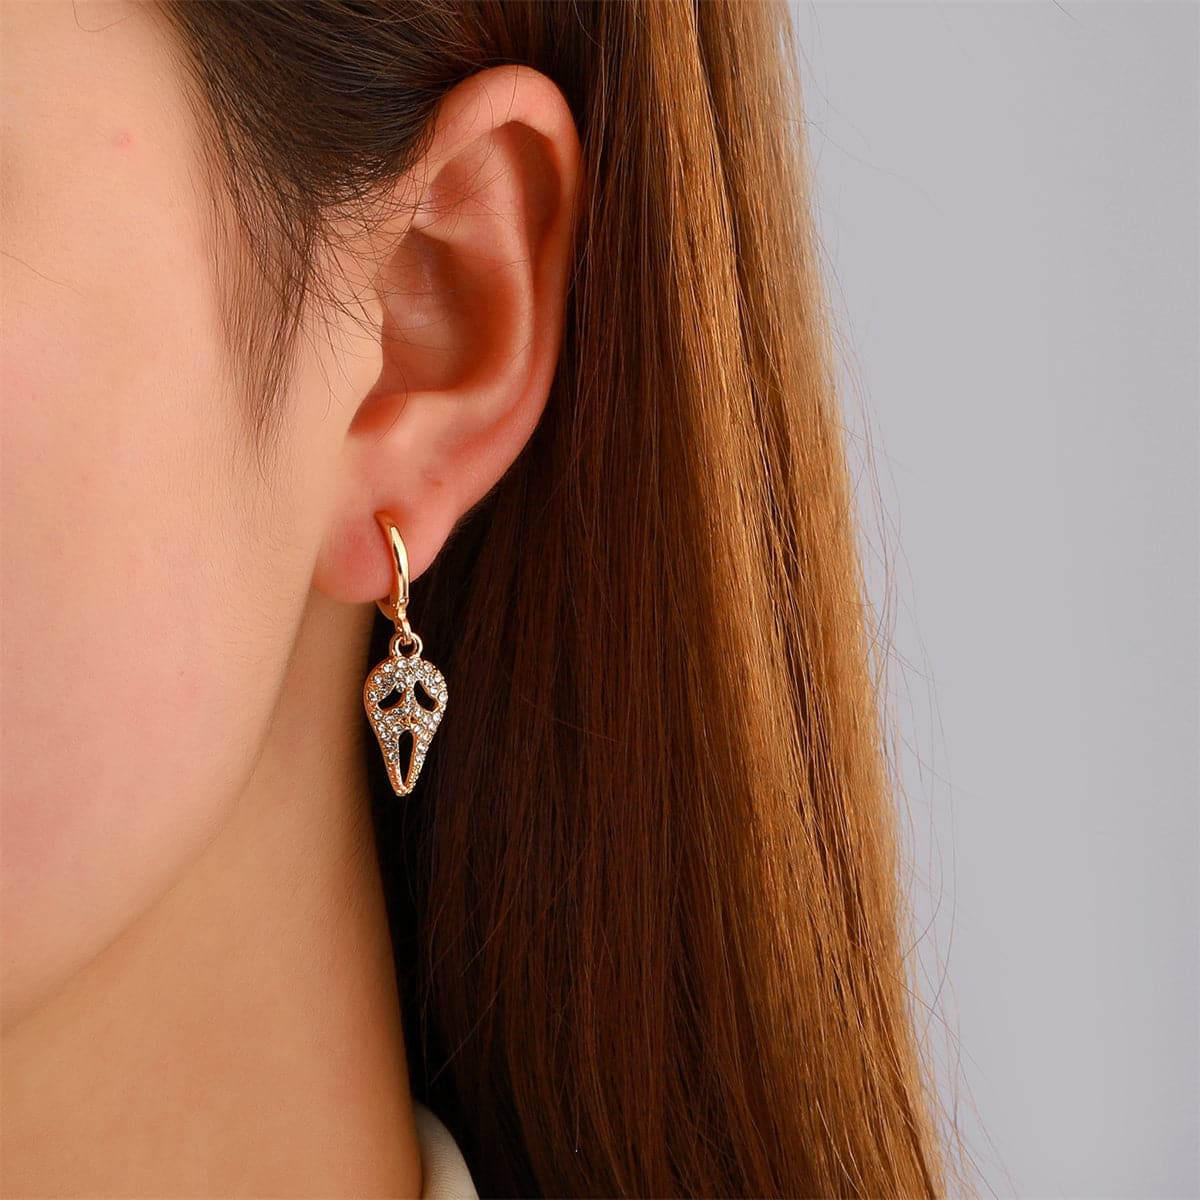 Cubic Zirconia & 18K Gold-Plated Screaming Ghost Drop Earrings